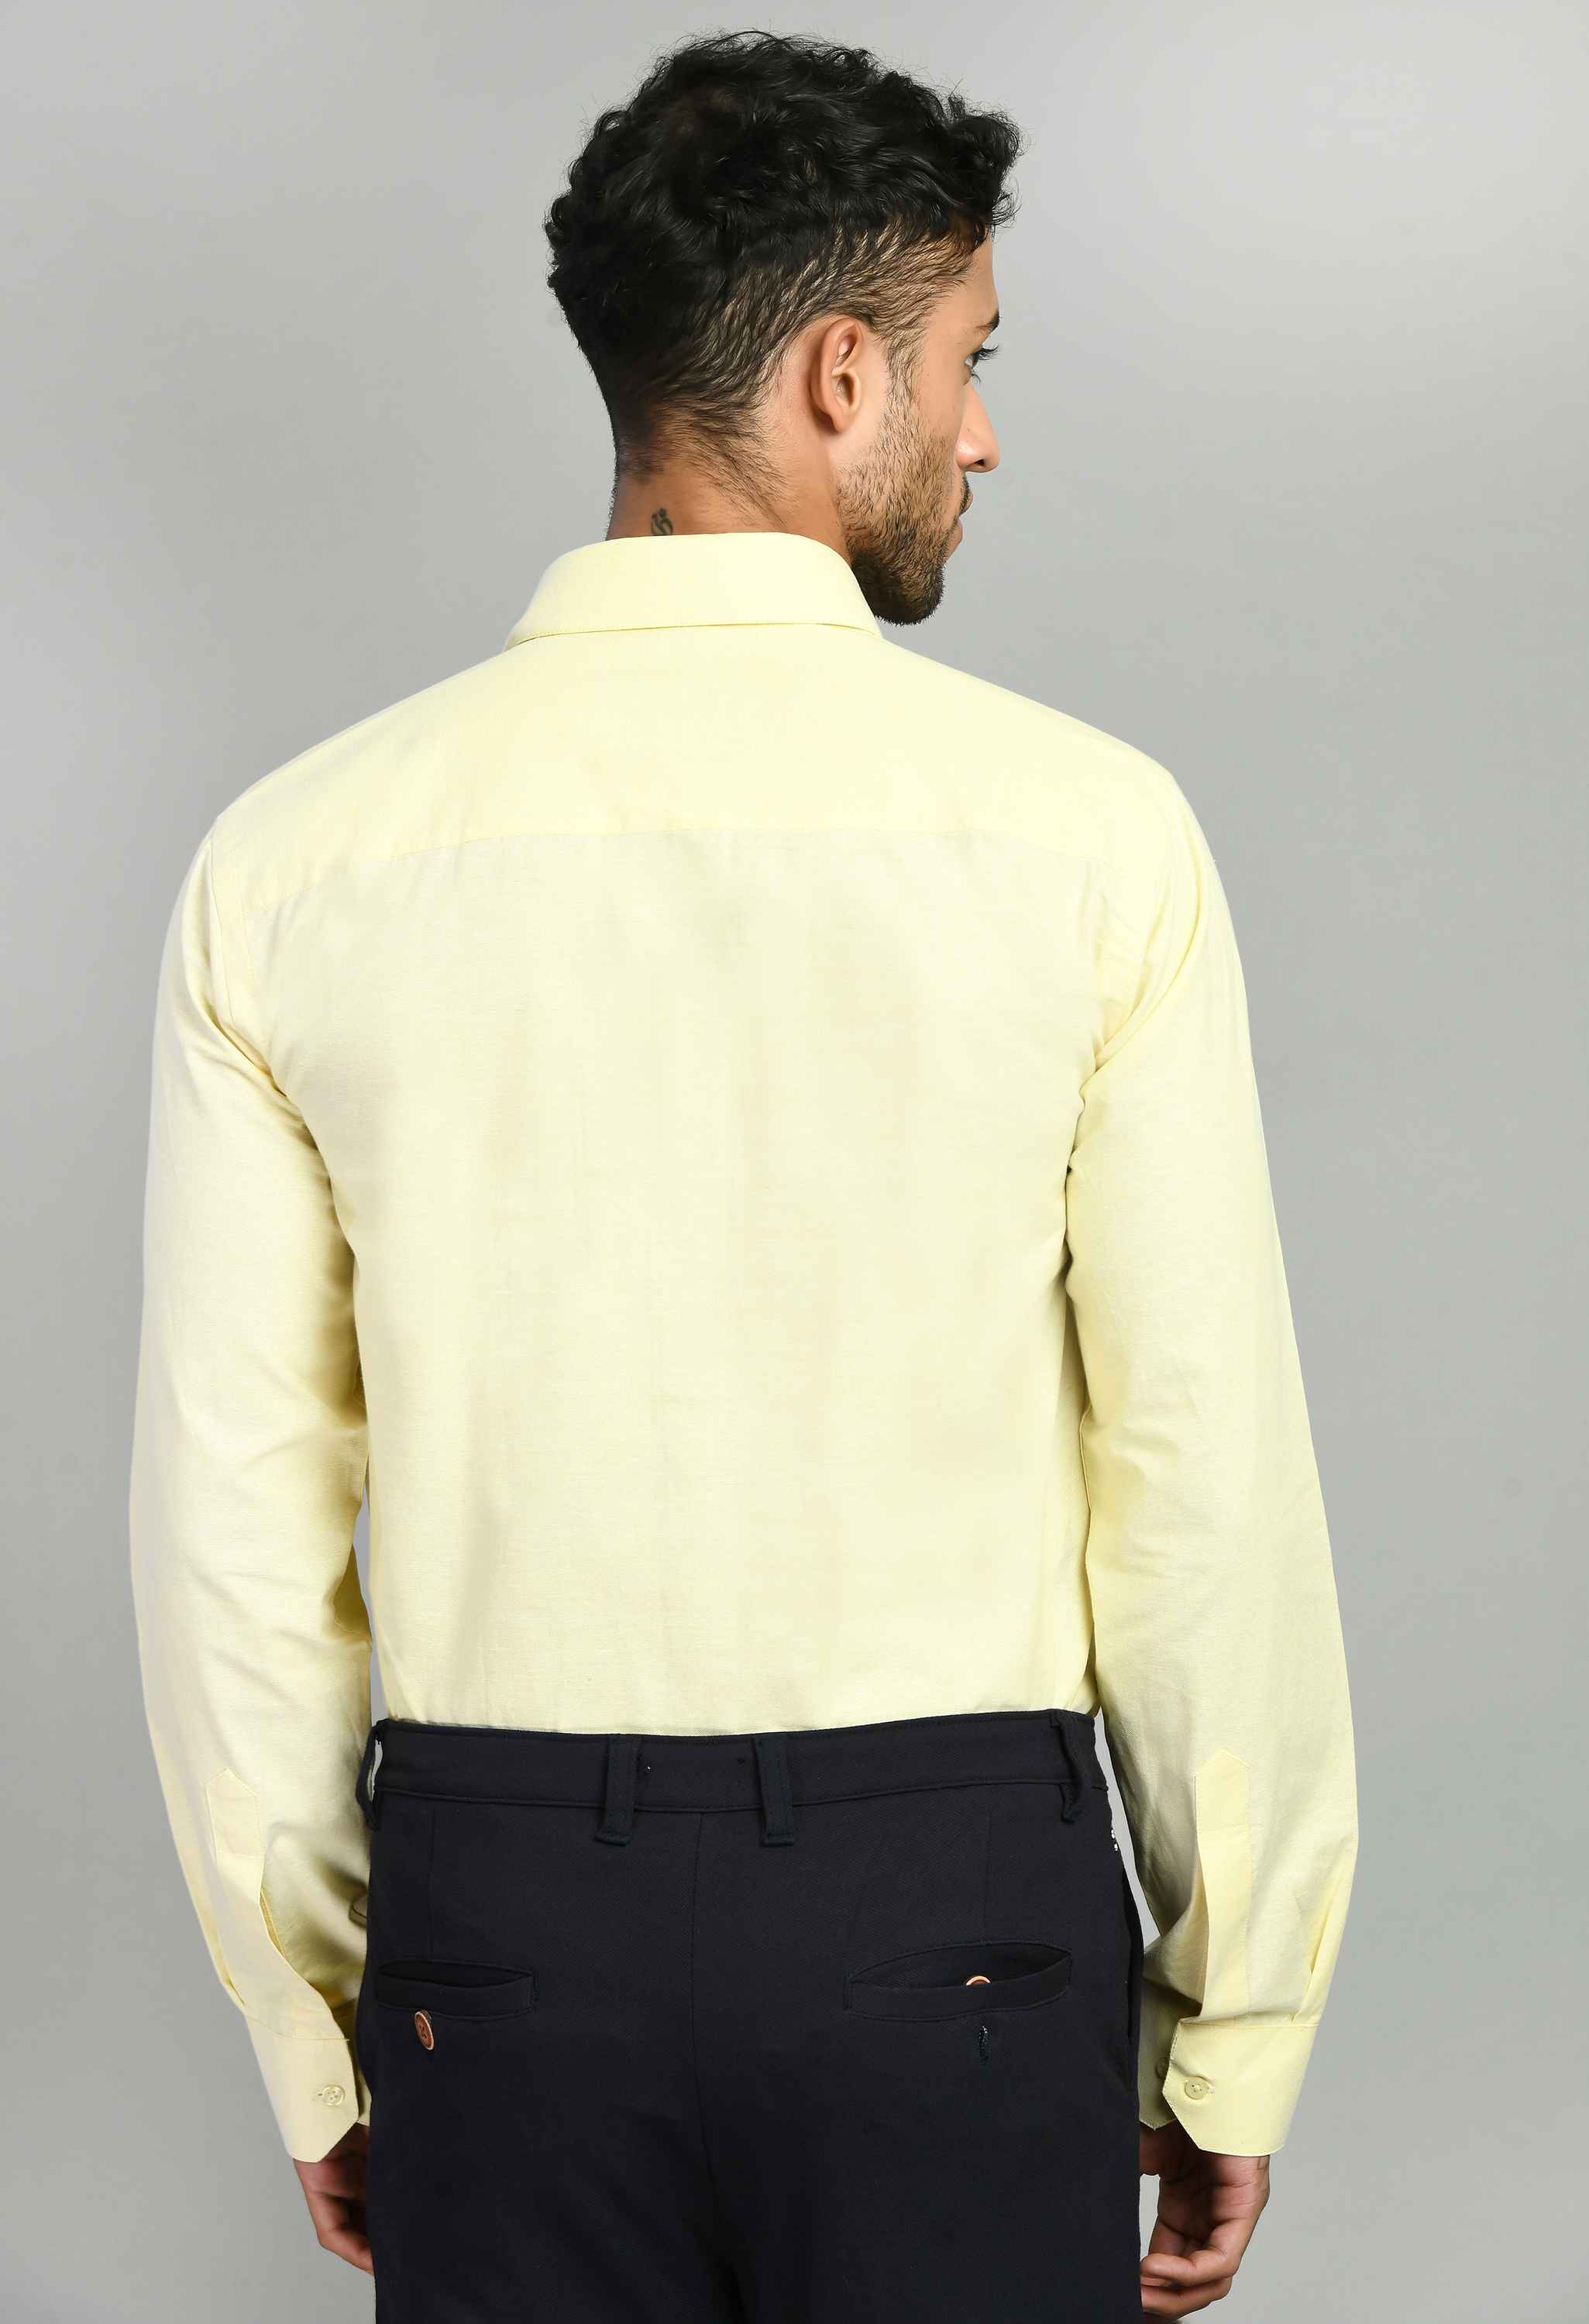 Men's Solid Cotton Oxford Slim Fit Shirt